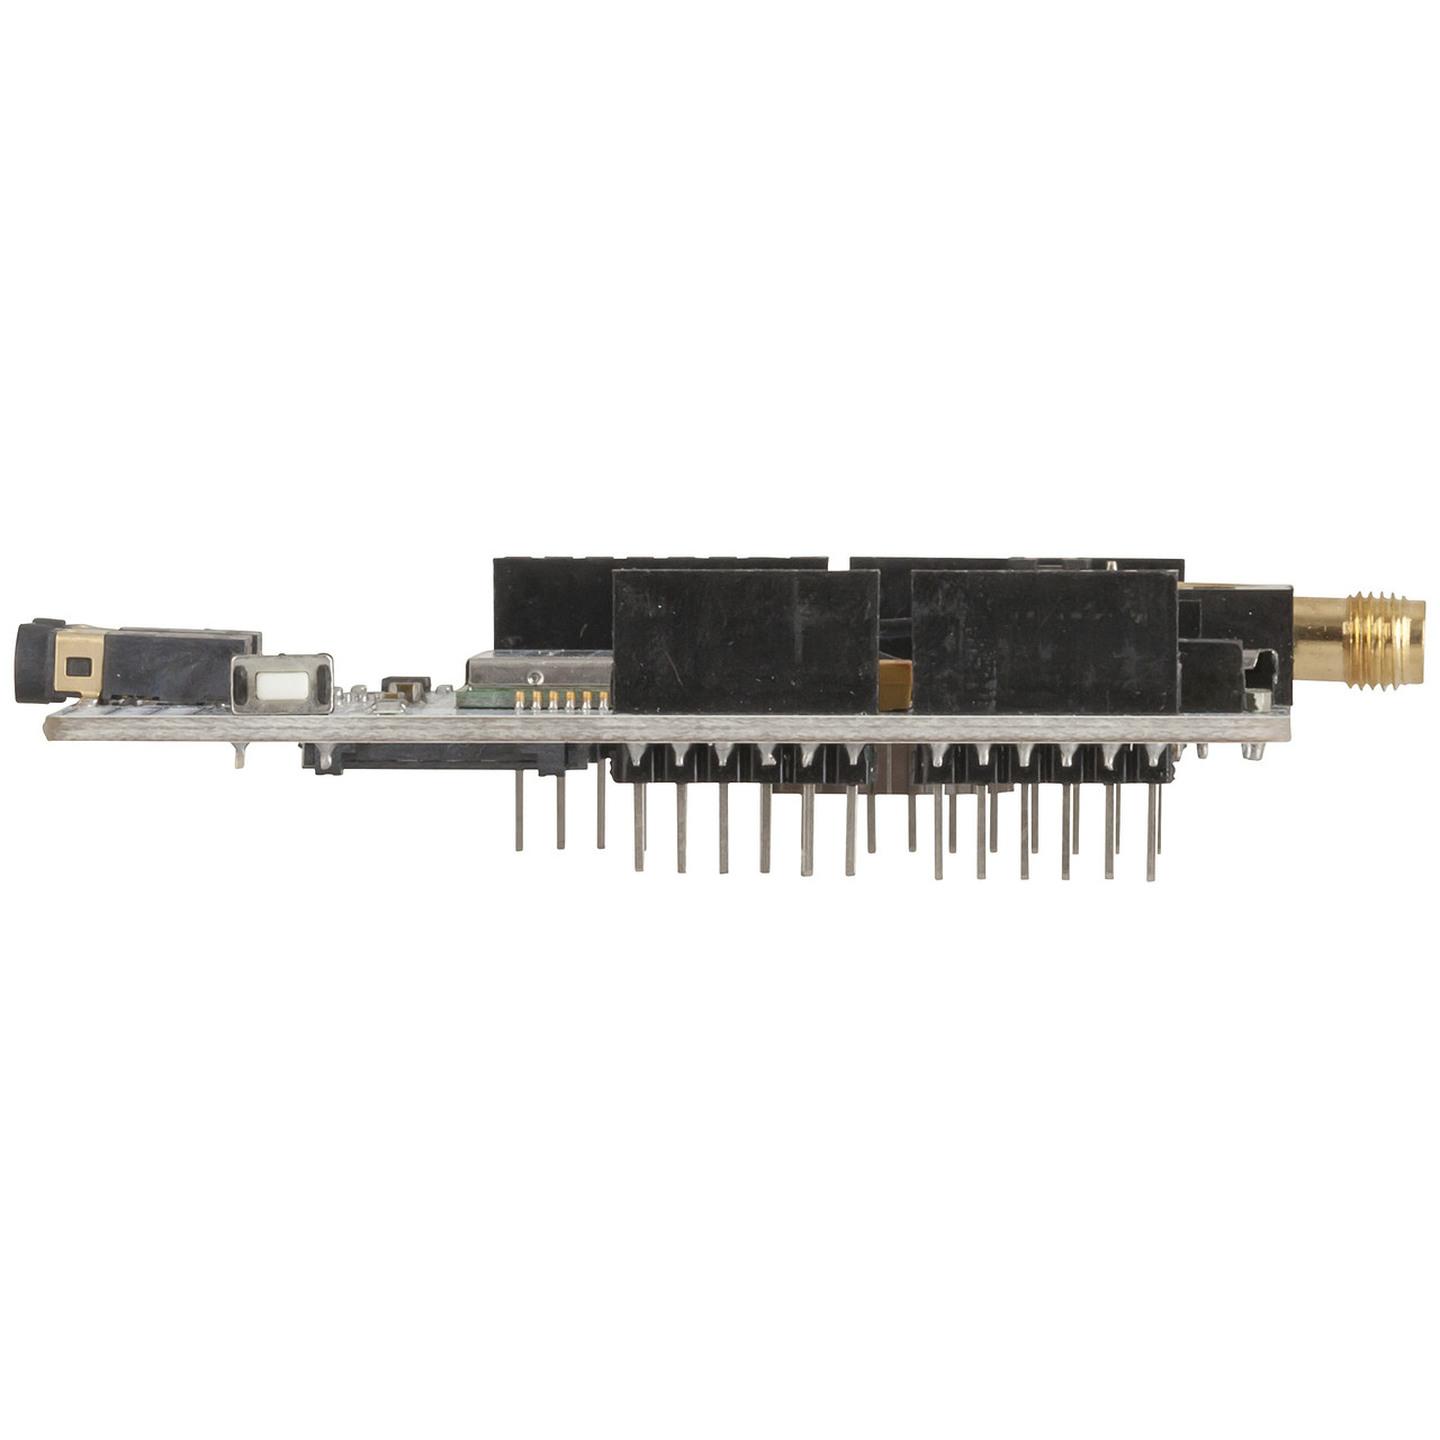 GPRS/GSM Shield for Arduino